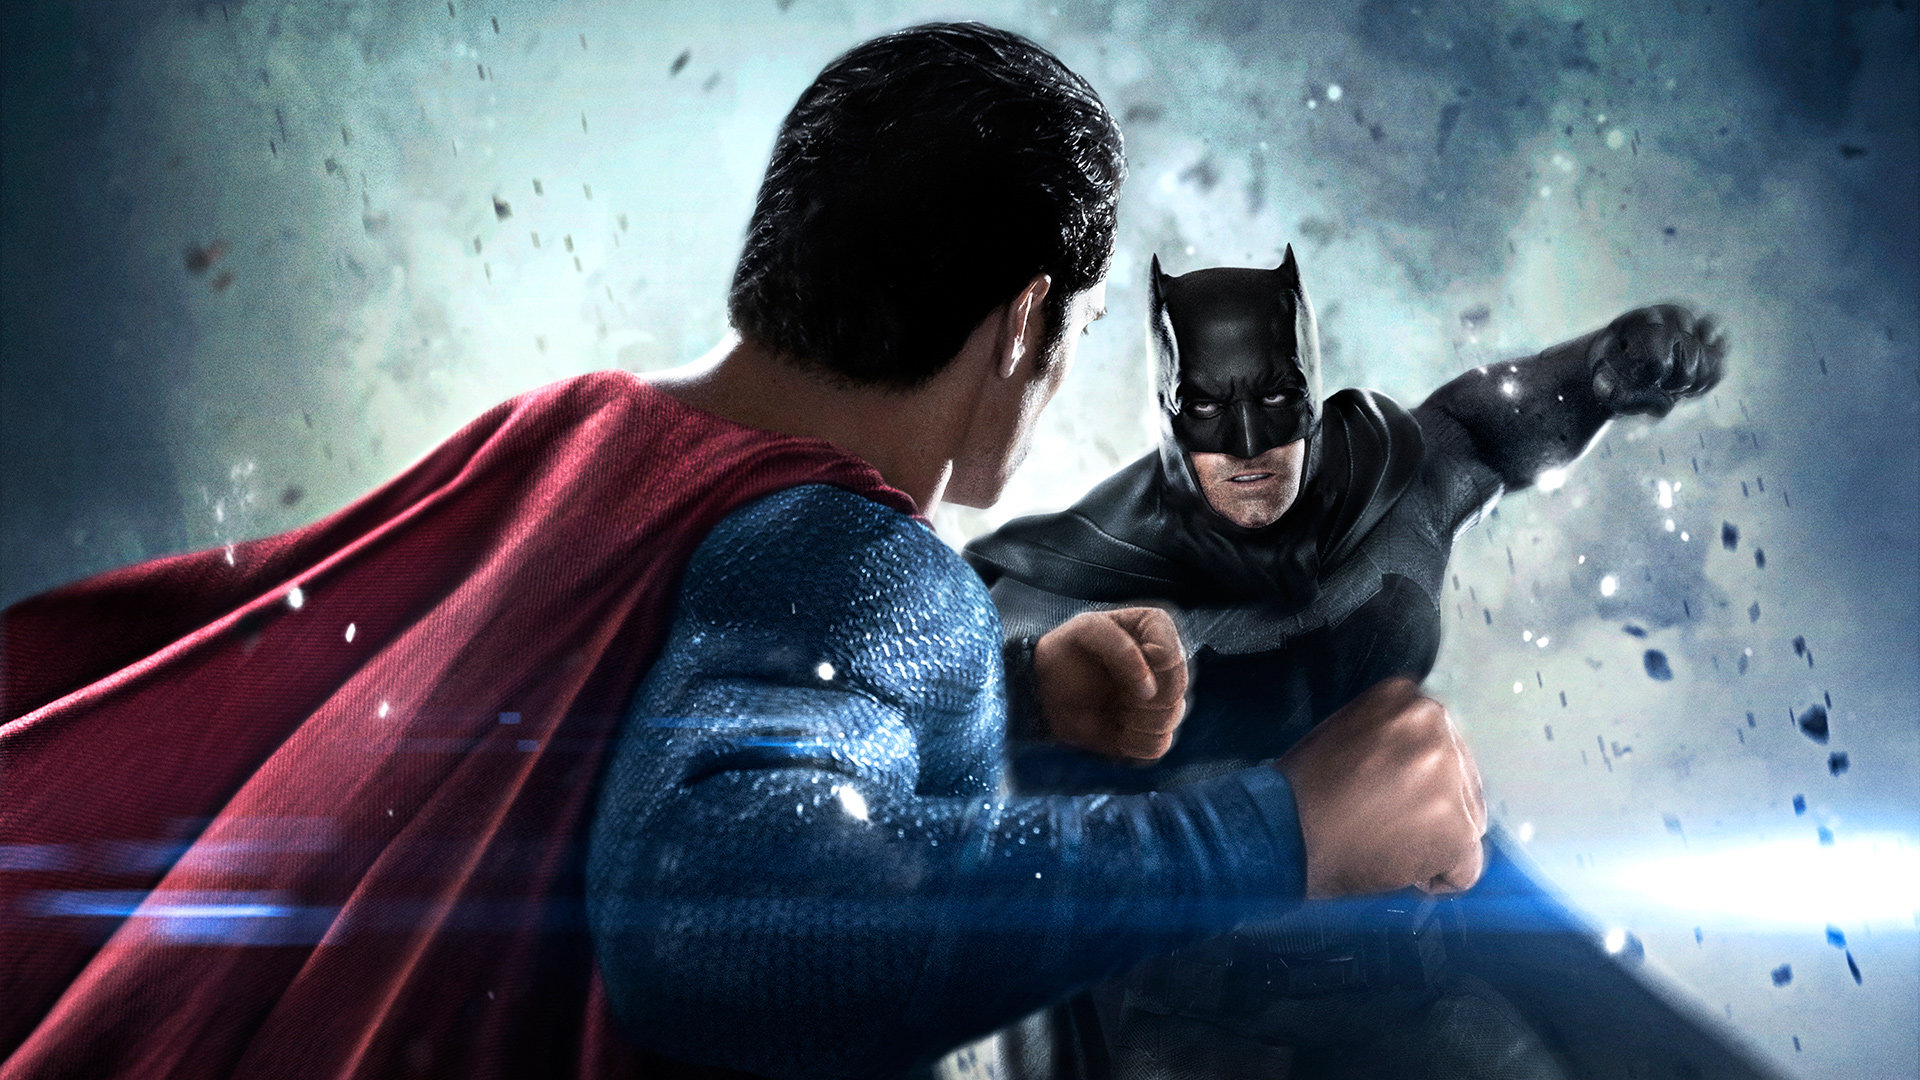 Best Batman V Superman: Dawn Of Justice wallpaper ID:83823 for High Resolution full hd 1080p desktop